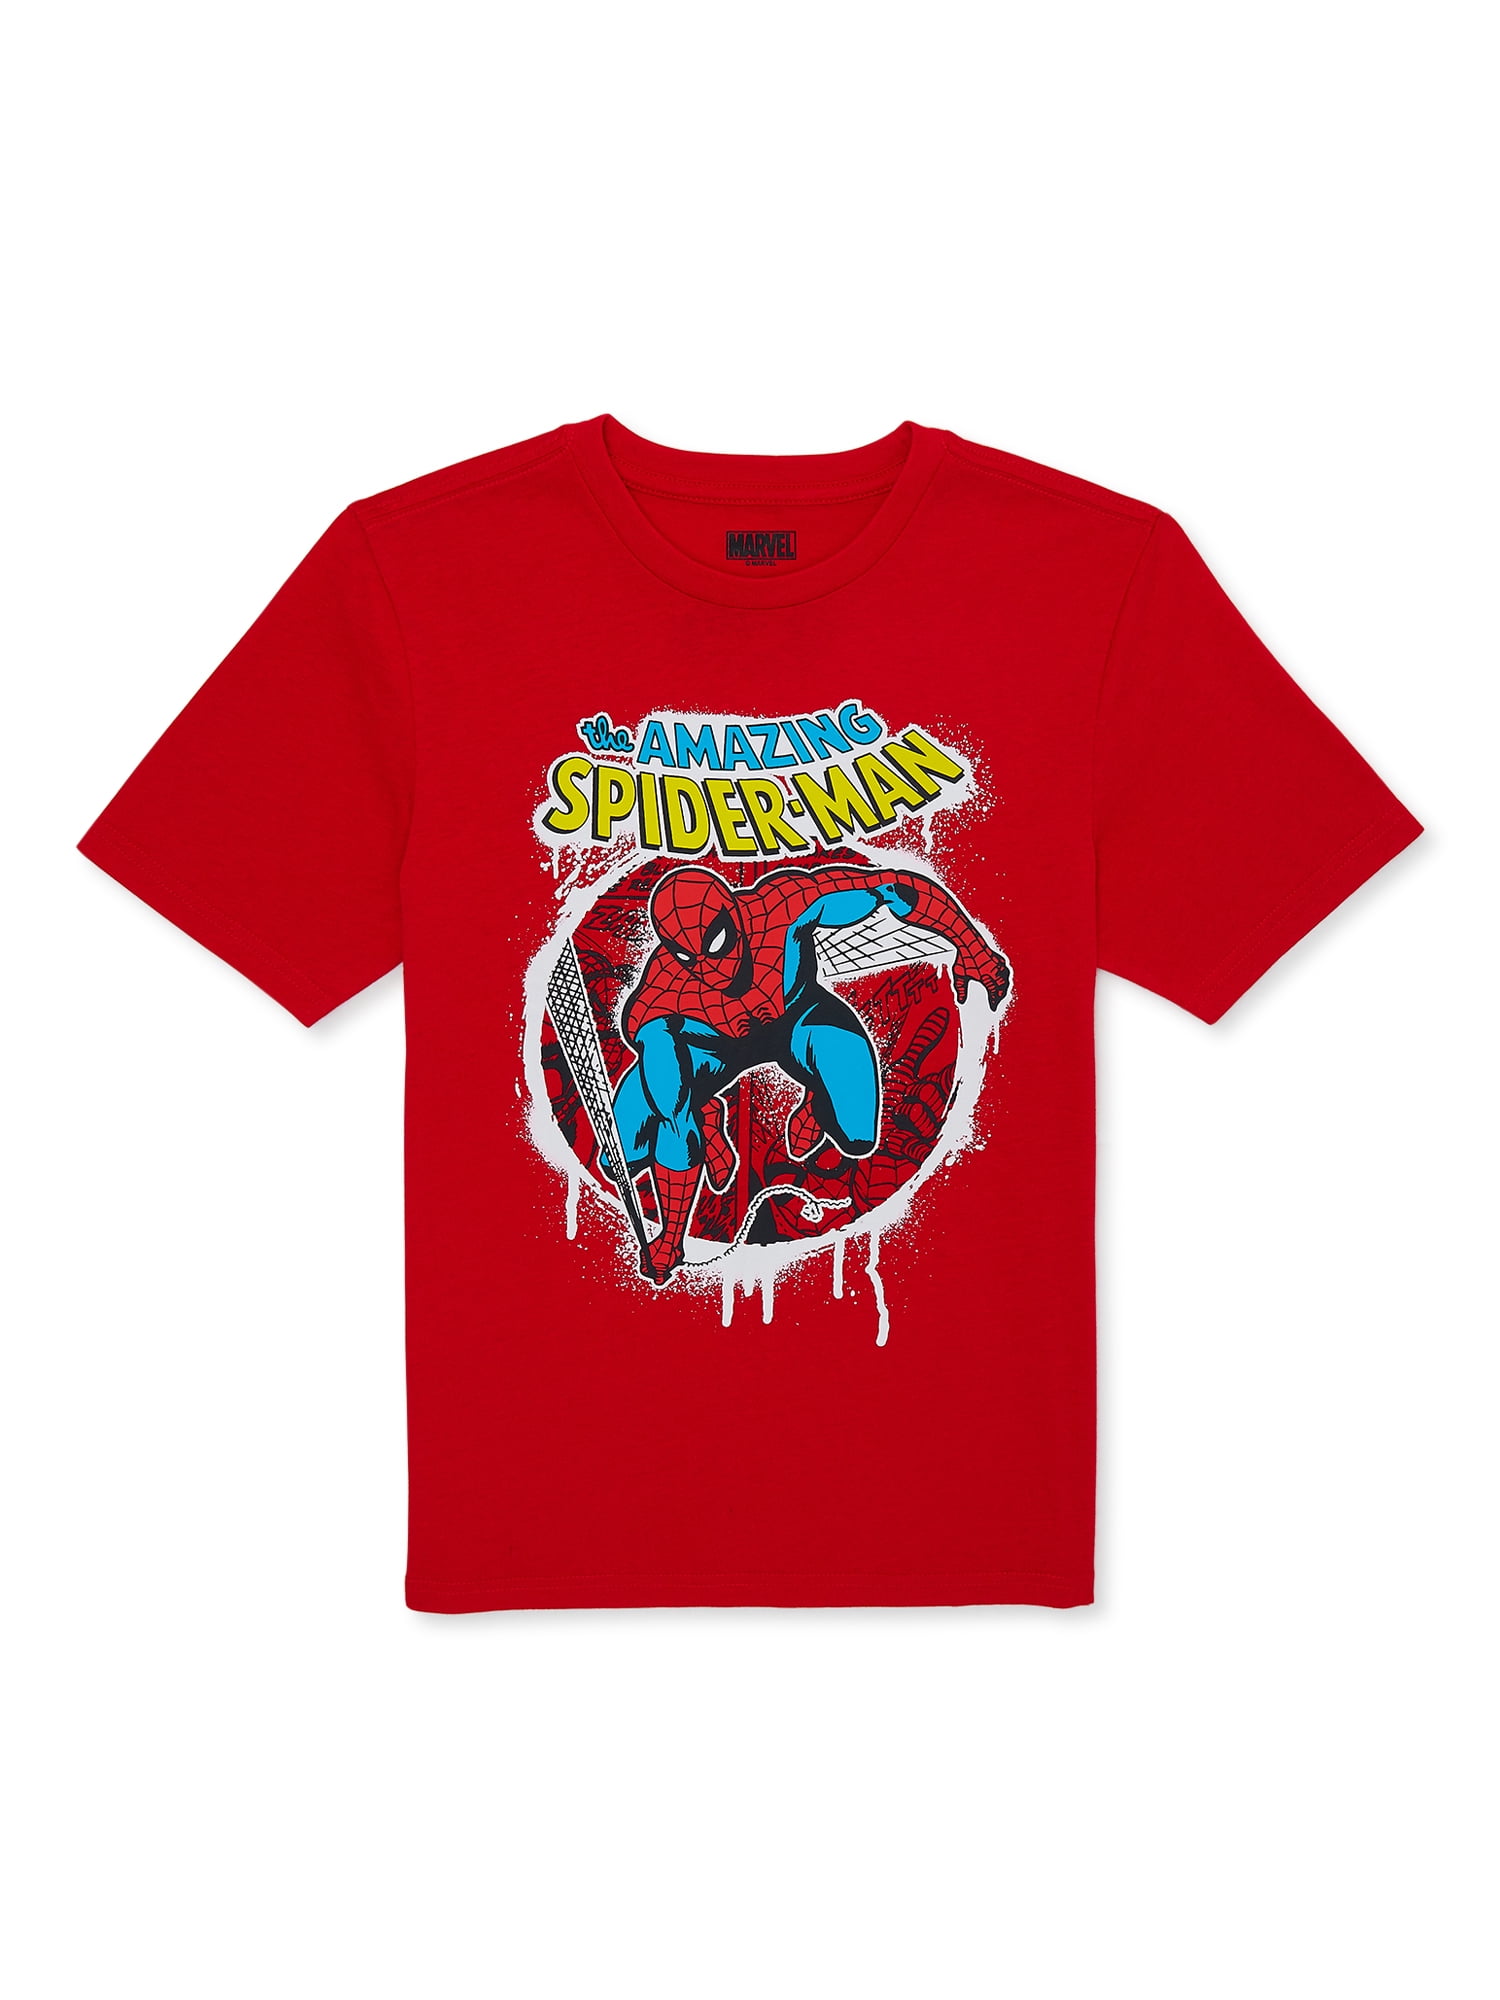 Spiderman Custom Birthday T shirt kids size 4 White short sleeve